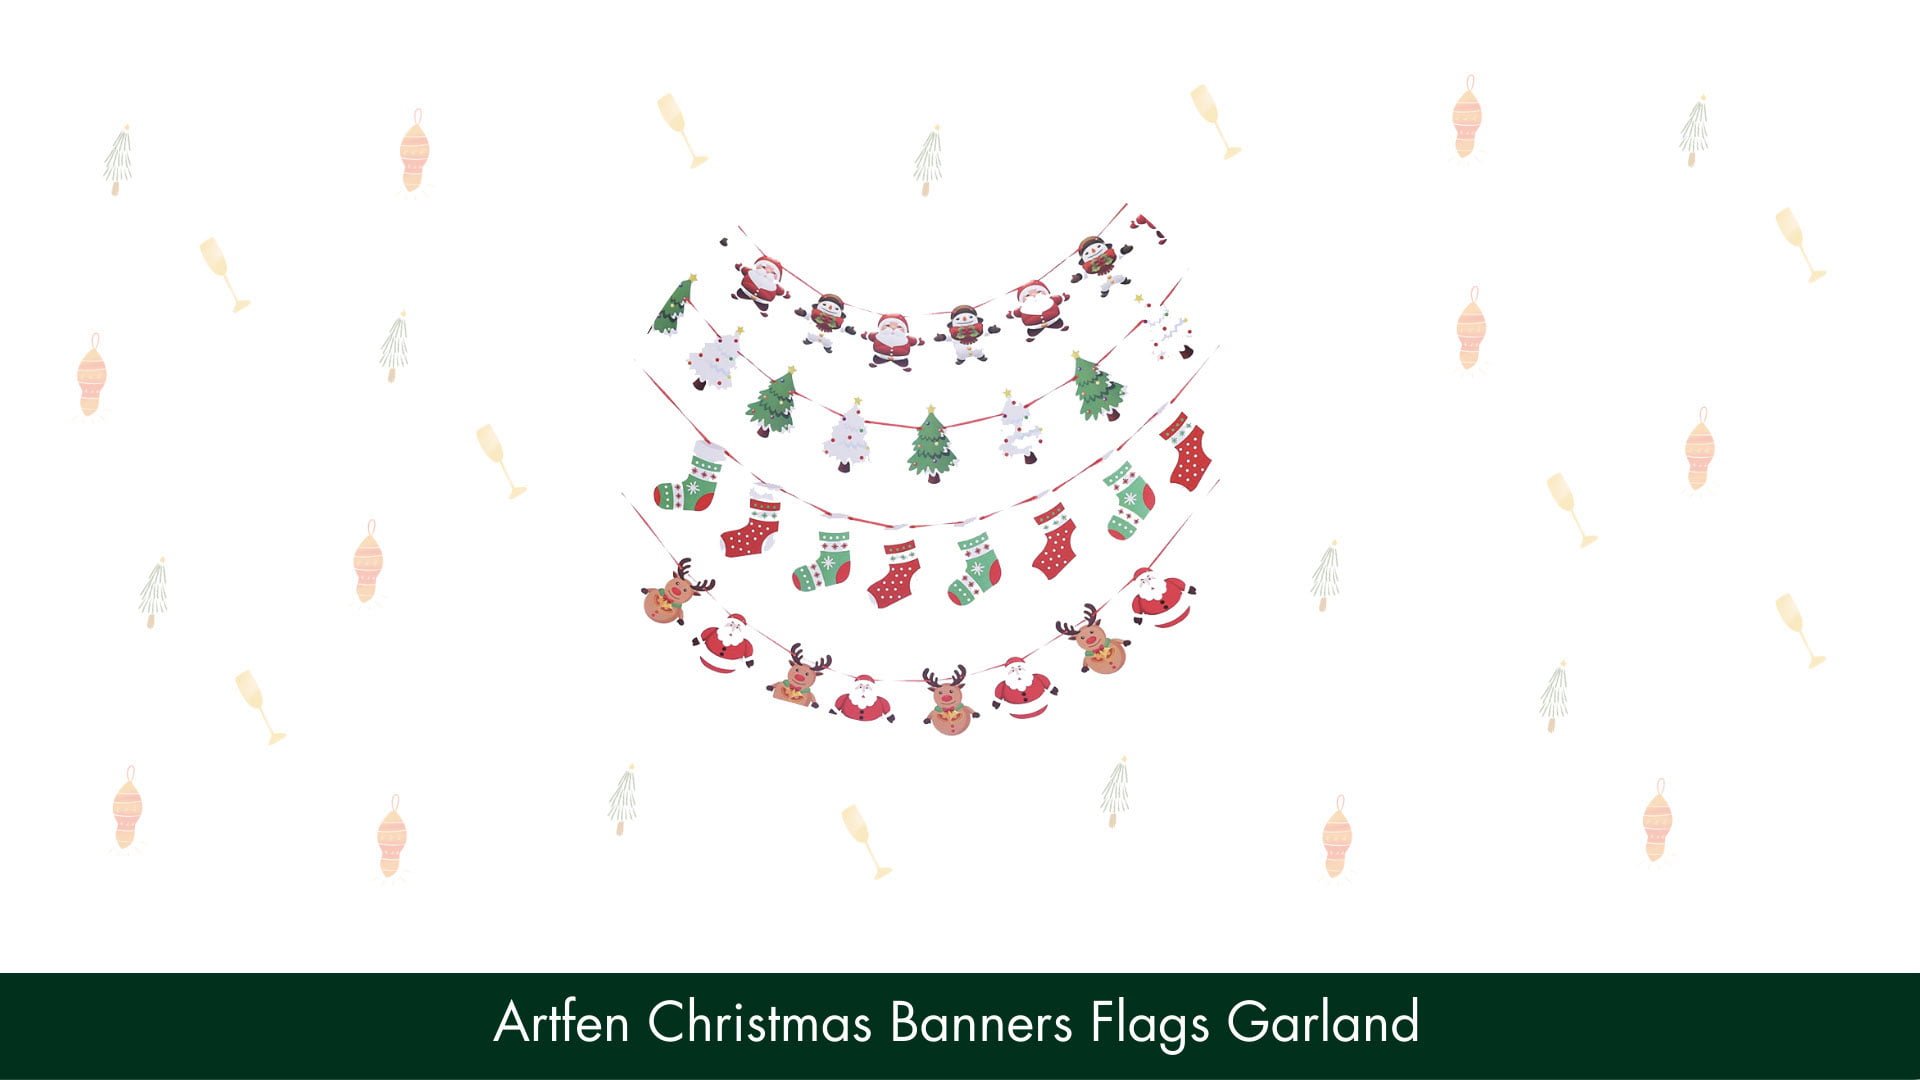 Artfen Christmas Banners Flags Garland